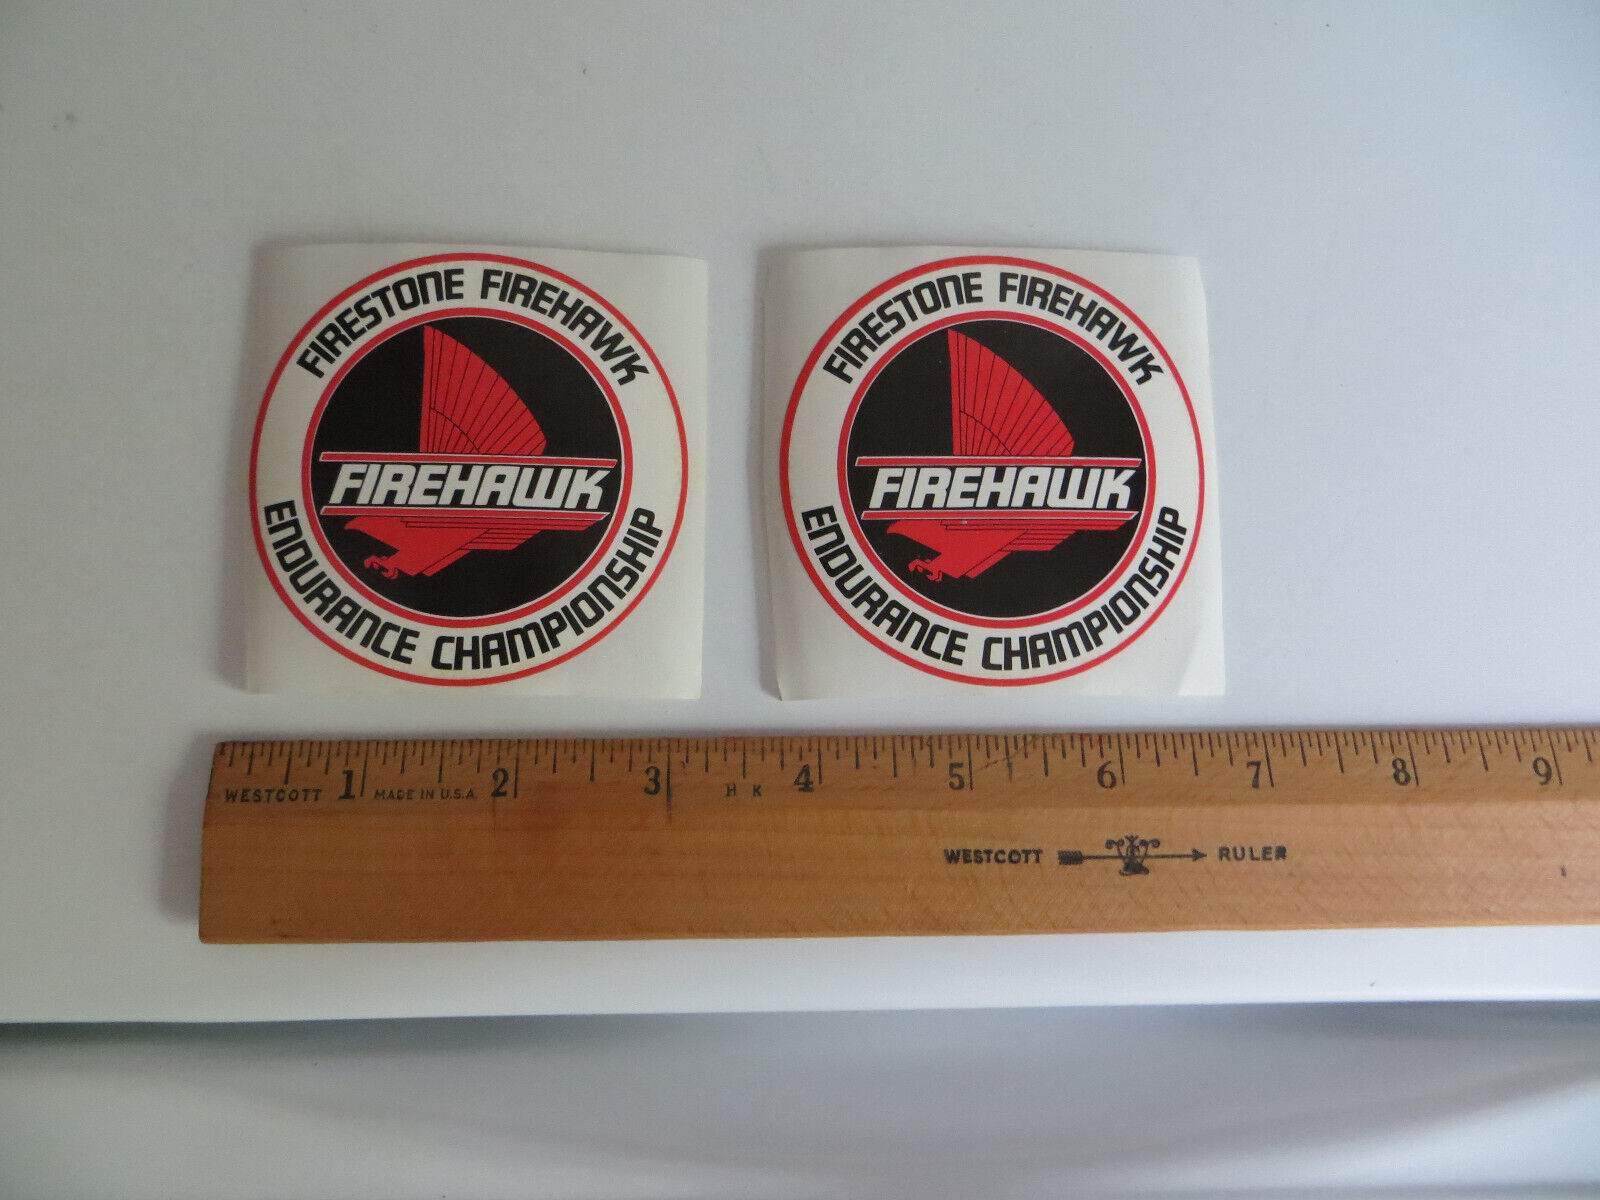 Firestone Firehawk Endurance Championship stickers